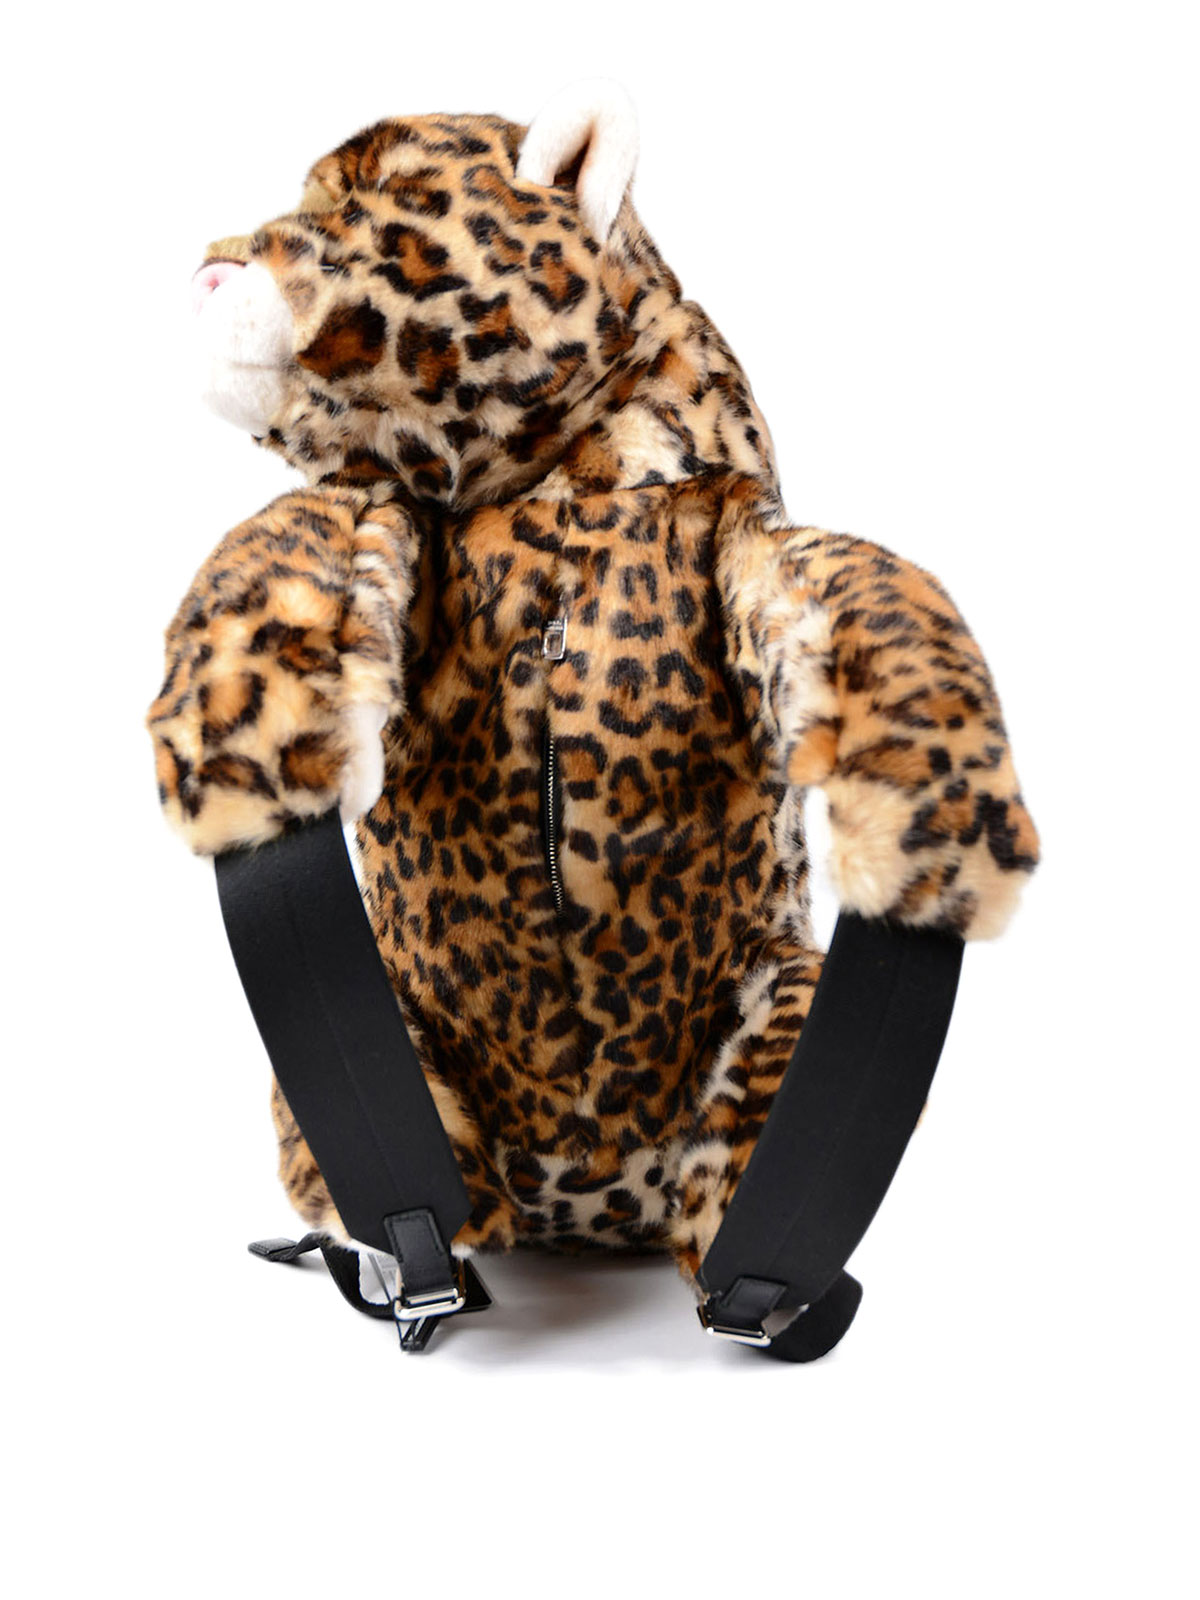 Backpacks Dolce & Gabbana - Stuffed animal inspired backpack -  BB6410AM6168S193